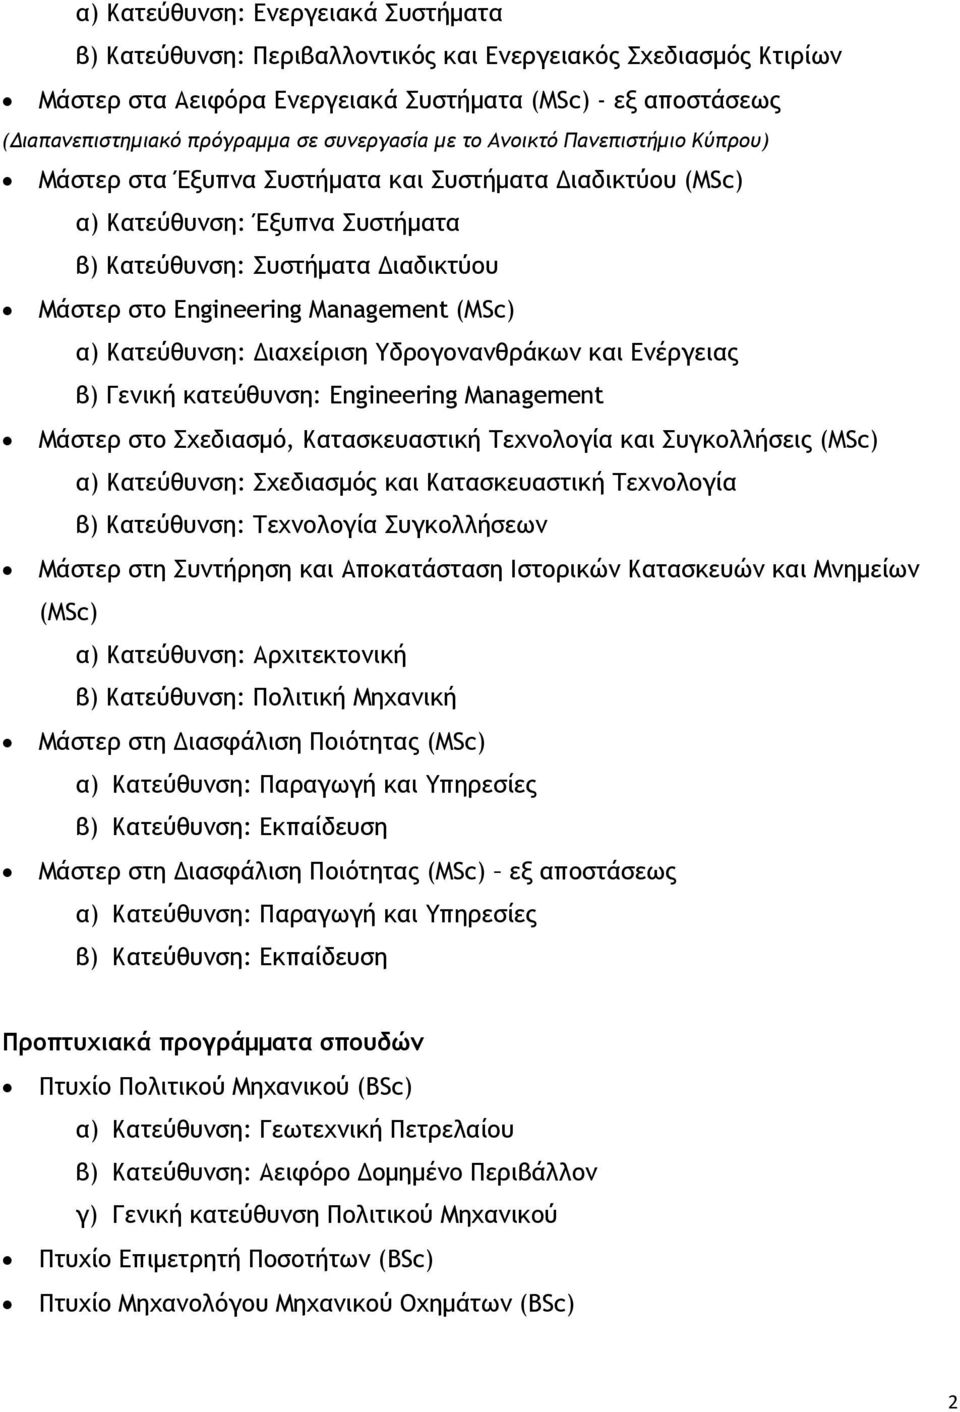 Management (MSc) α) Κατεύθυνση: Διαχείριση Υδρογονανθράκων και Ενέργειας β) Γενική κατεύθυνση: Engineering Management Μάστερ στο Σχεδιασμό, Κατασκευαστική Τεχνολογία και Συγκολλήσεις (MSc) α)